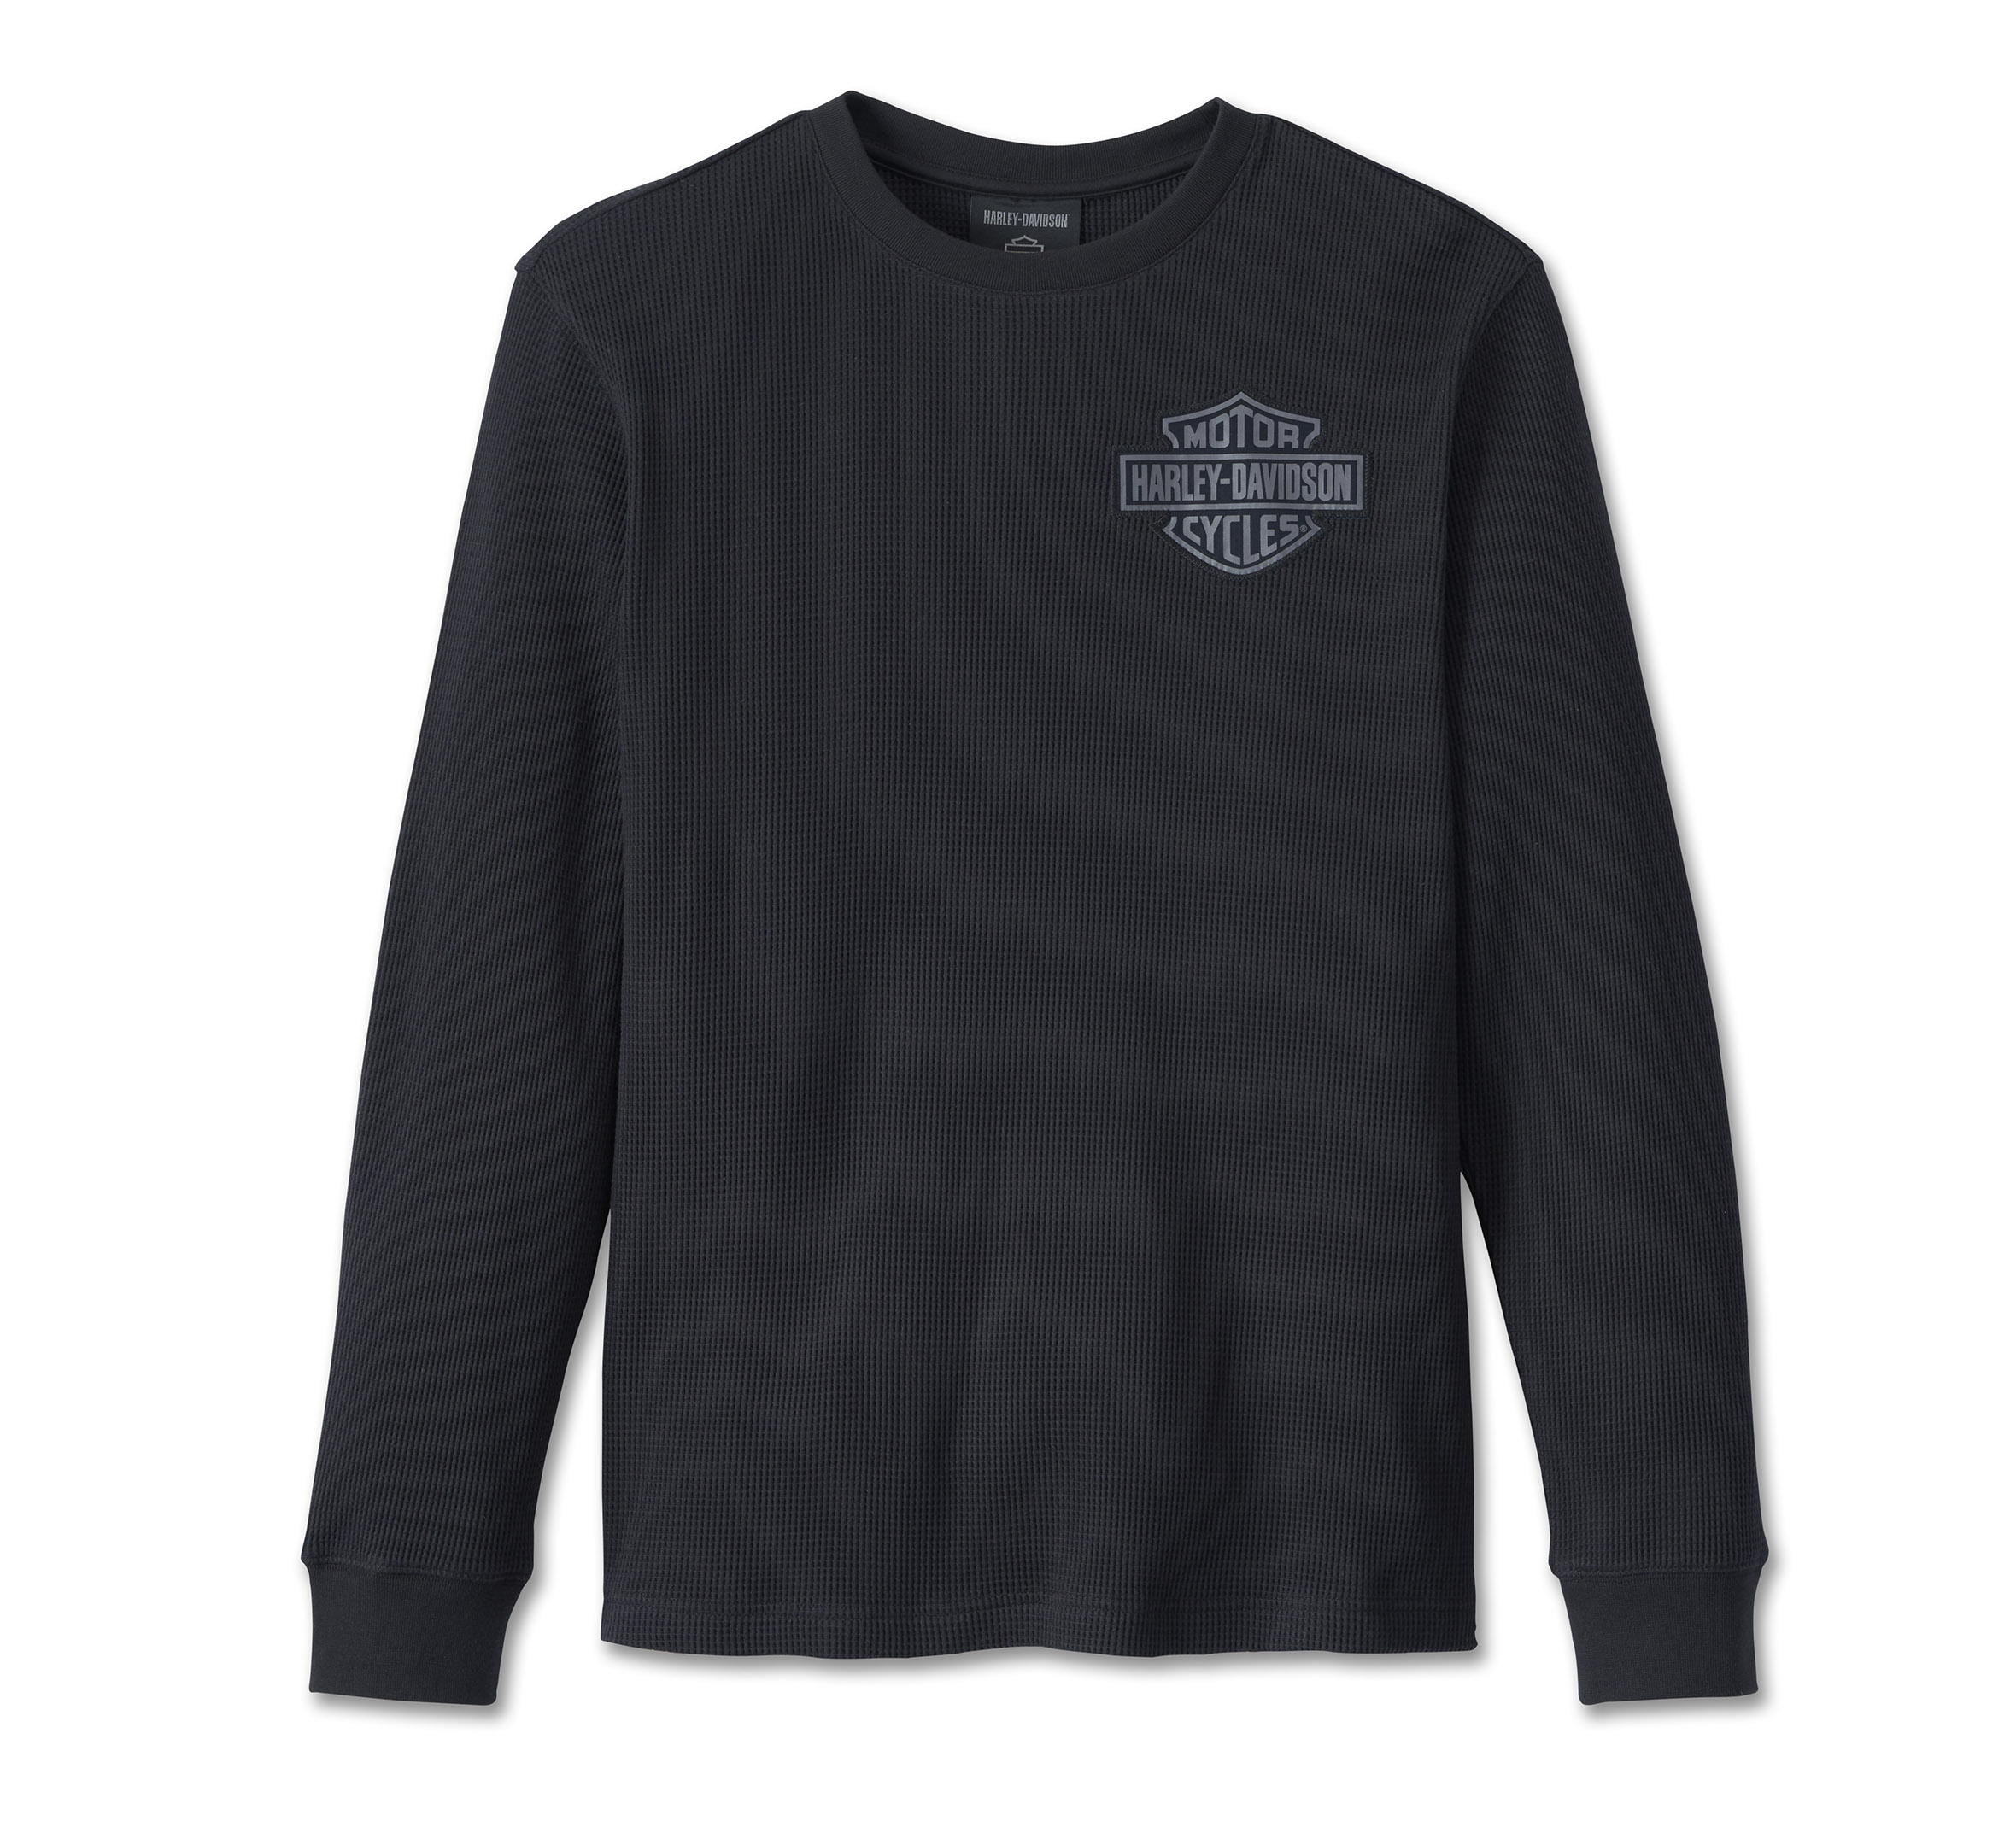 Harley-Davidson Men's Bar & Shield 3D Long Sleeve Tee Shirt, Black Beauty - Medium